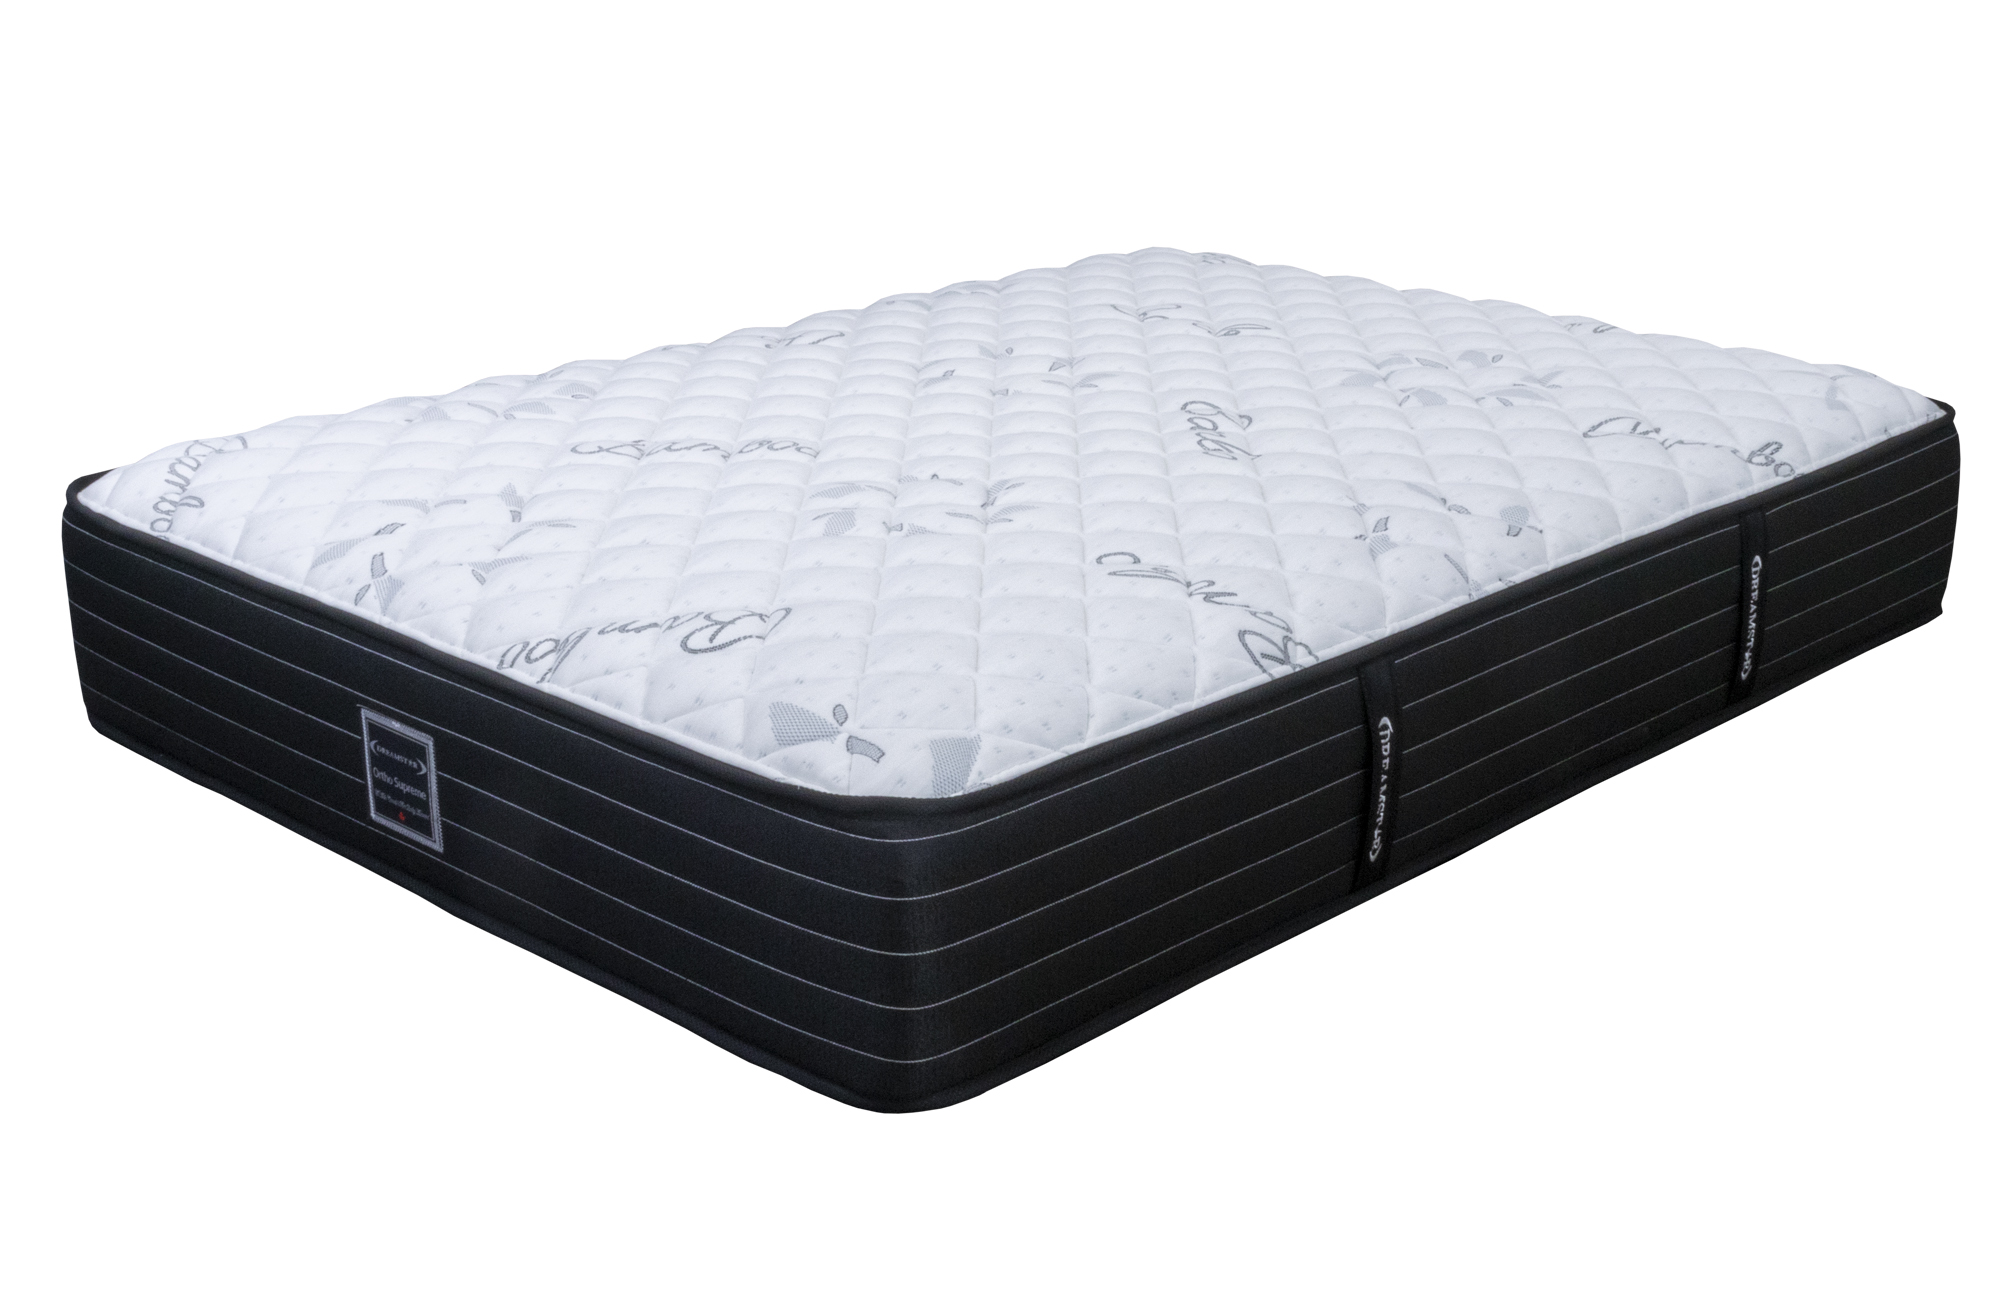 supreme 3 mattress protector